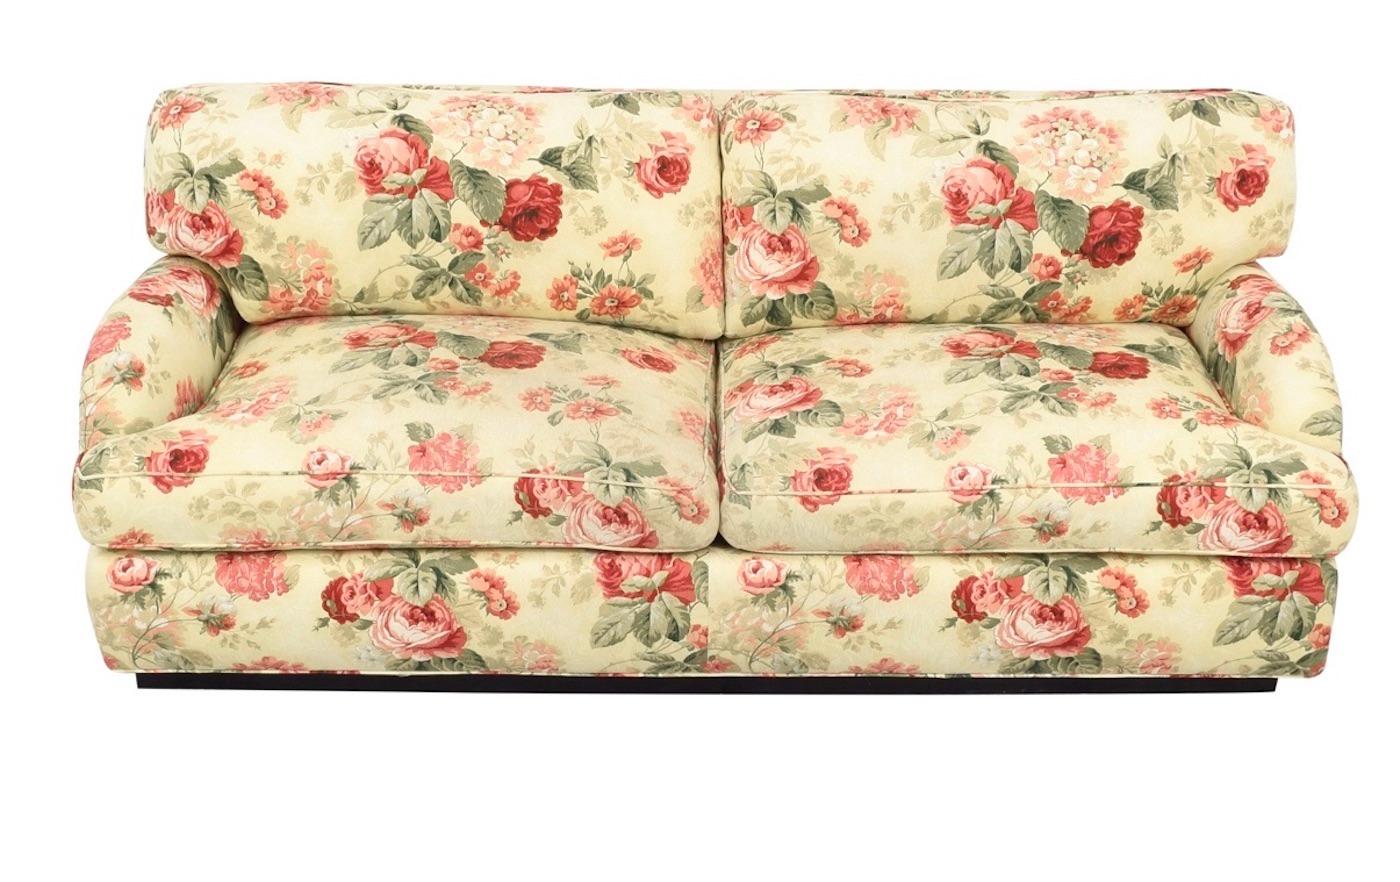 Sherrill custom English rose two-cushion rolled arm sofa, plinth base, loveseat. Gorgeous custom sofa.